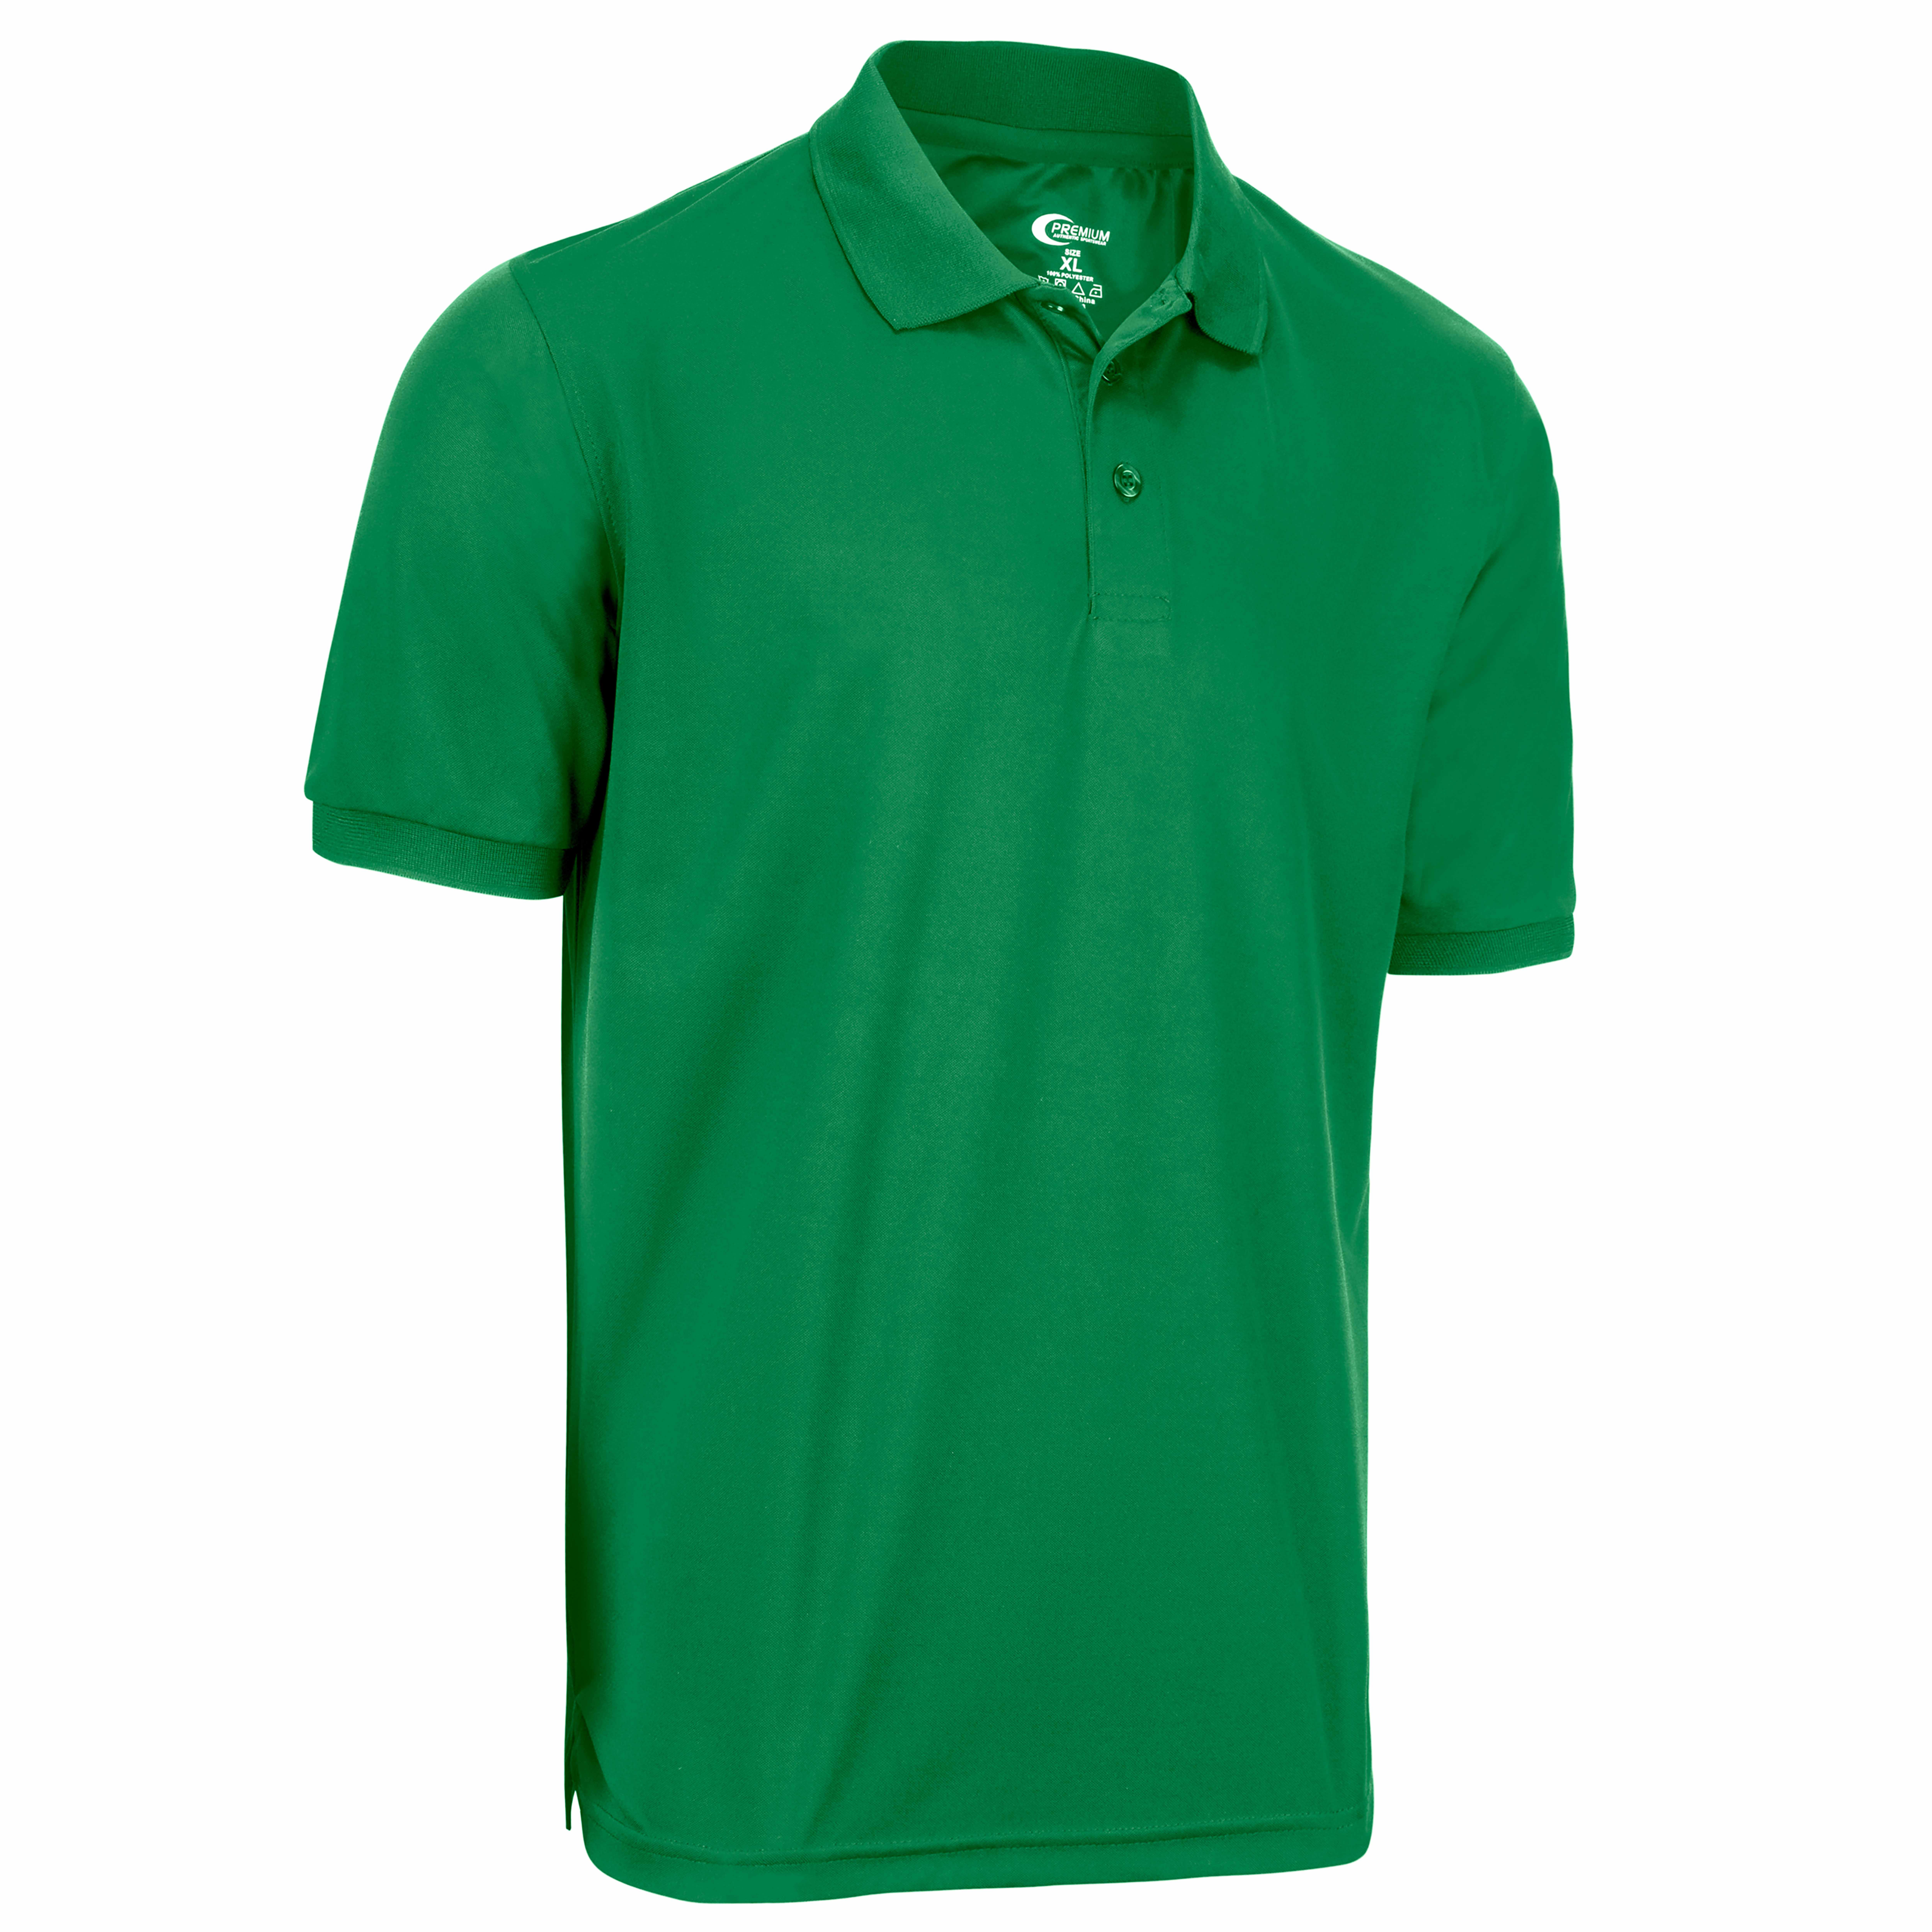 Boy's School UNIFORM Short Sleeve Polo Shirts - Kelly Green - Choose Your Sizes (2T-18/20)